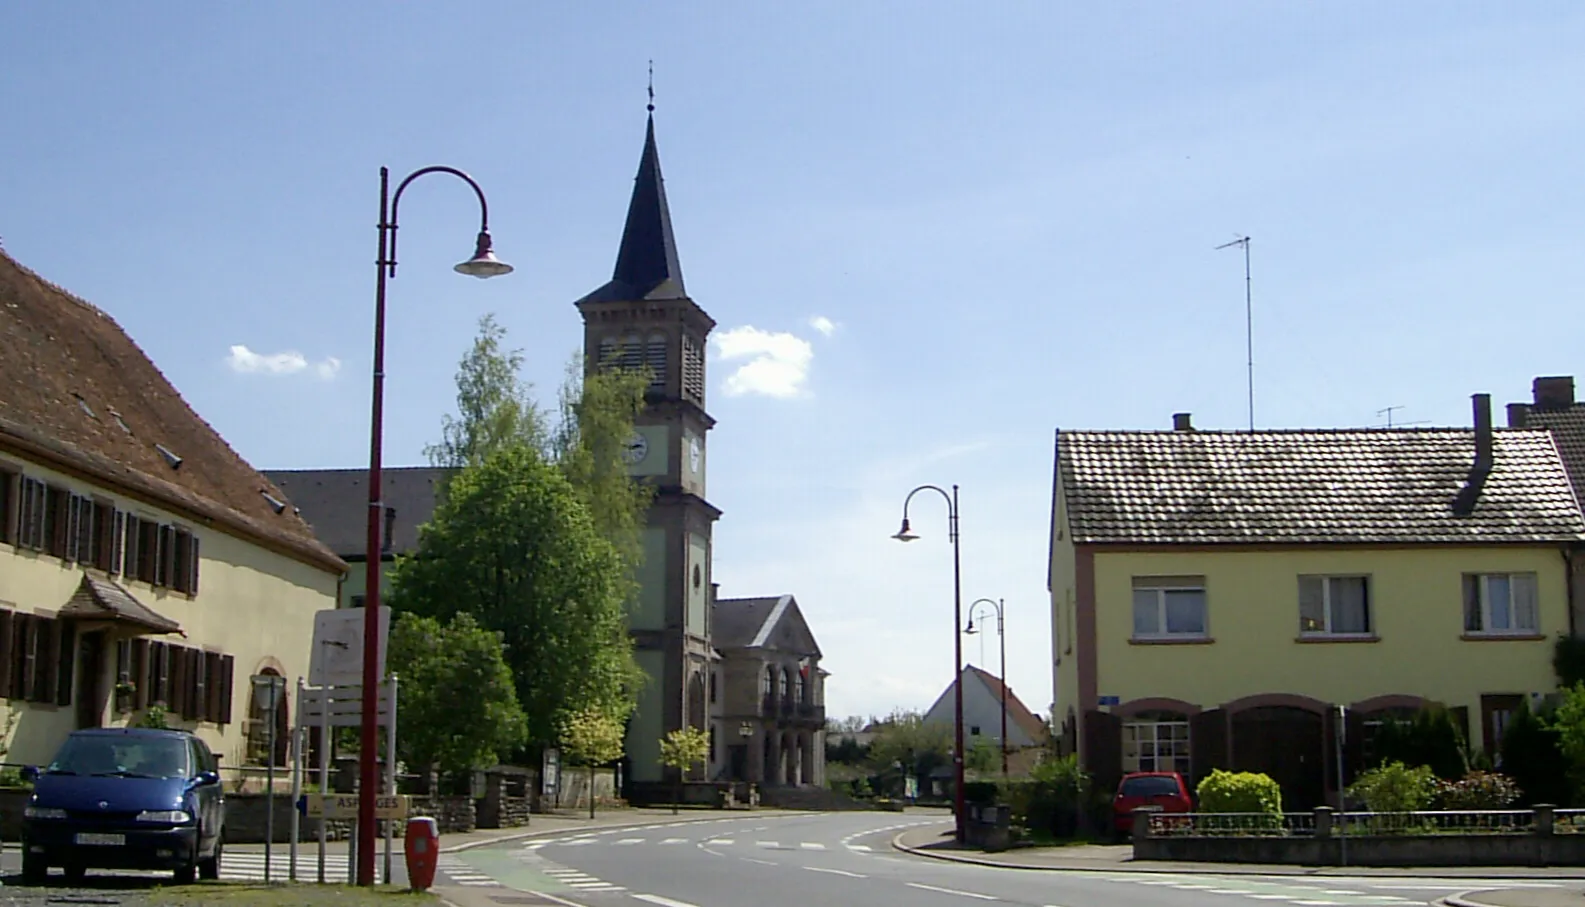 Photo showing: L'église luthérienne (1833) à Keskastel, Bas-Rhin